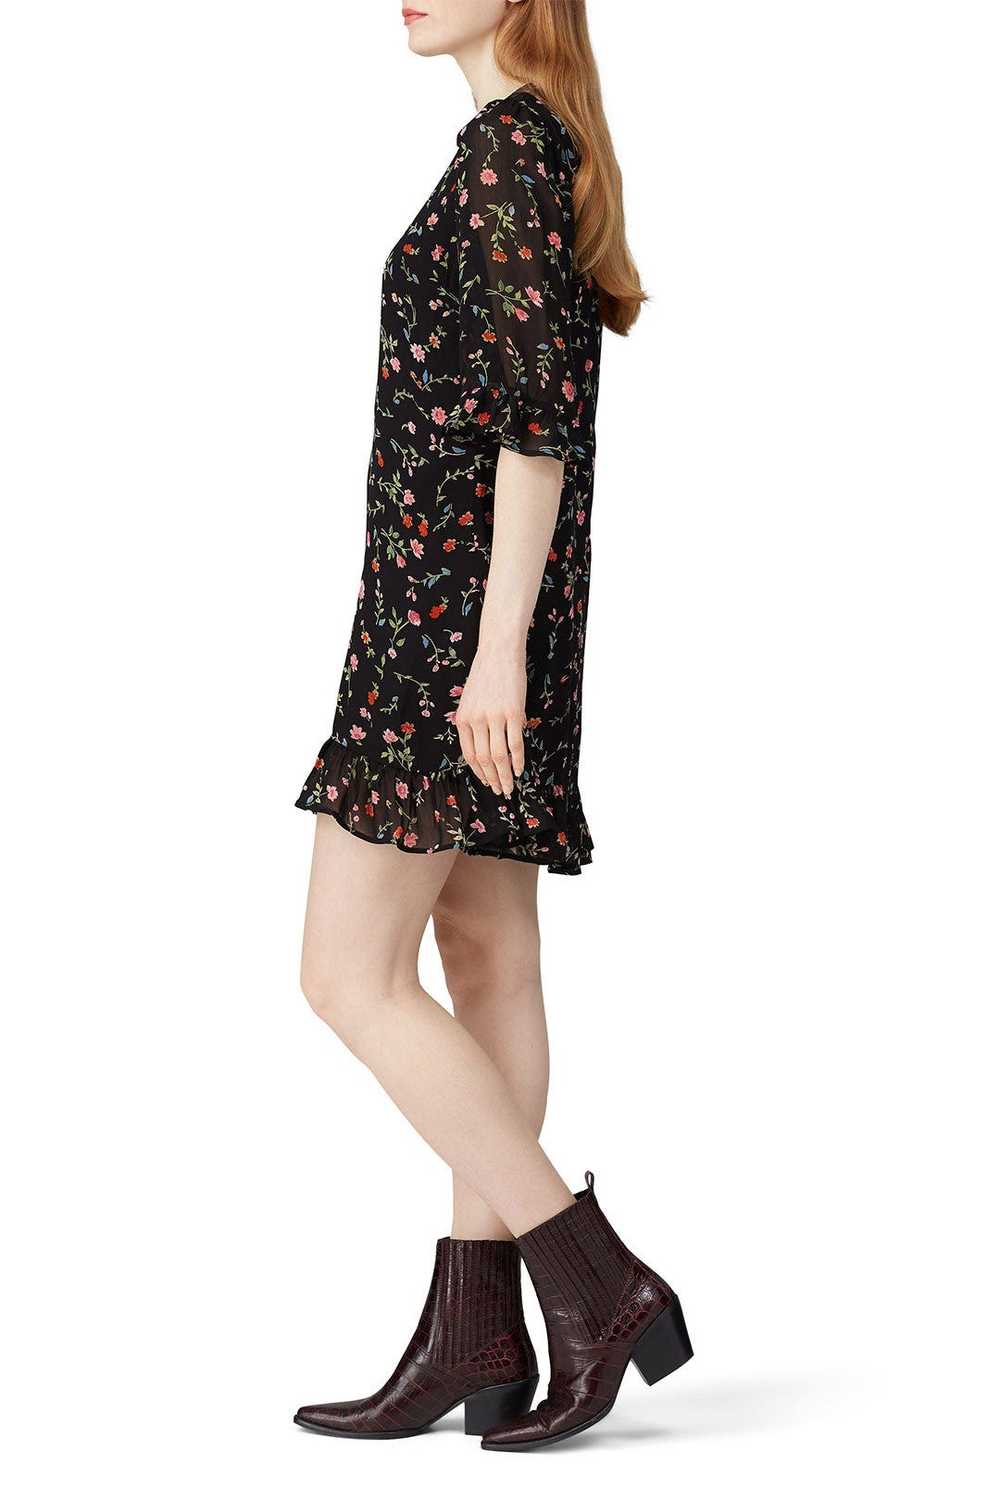 GANNI Black Floral Mini Dress - image 2